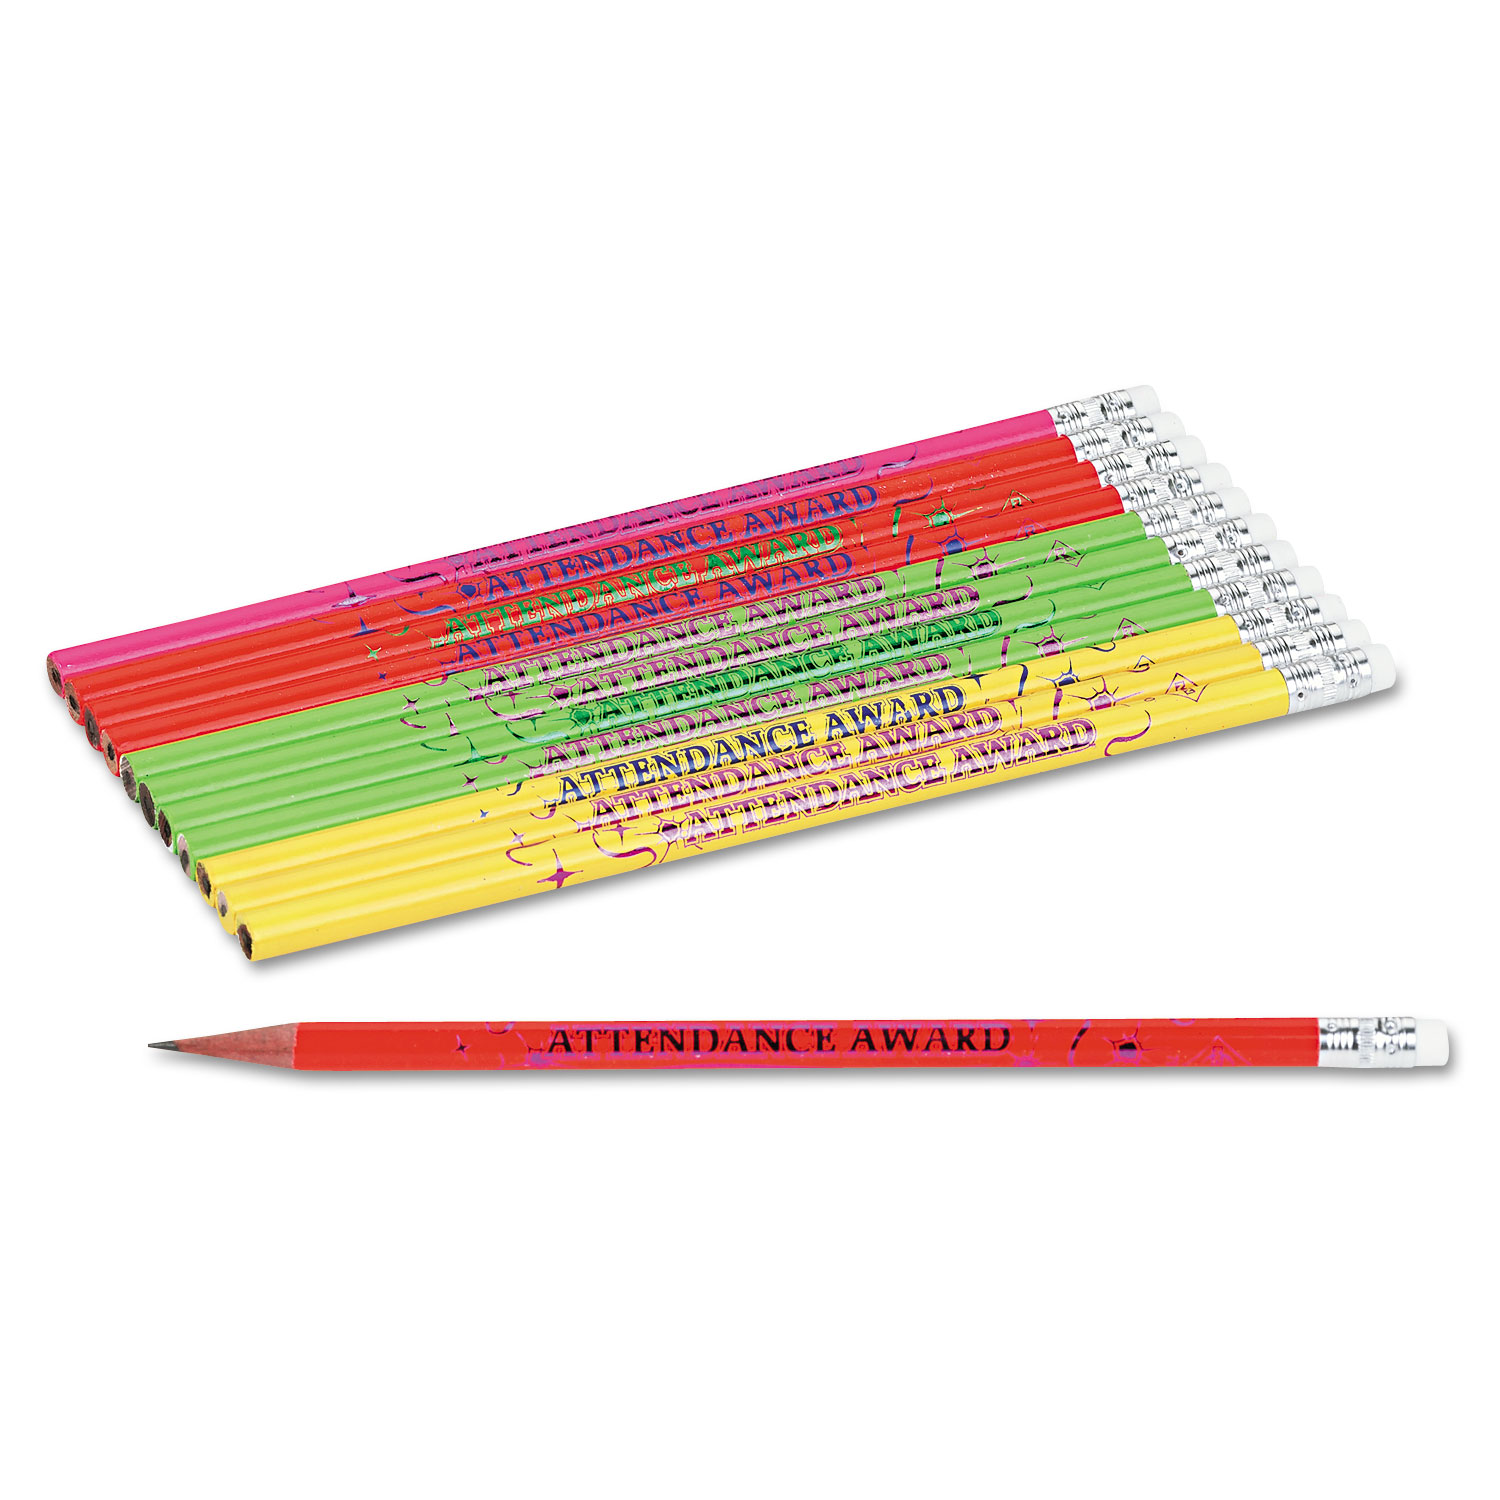  Moon Products 7910B Attendance Award Recognition Pencil, HB (#2), Black Lead, Assorted Barrel Colors, Dozen (MPD7910B) 